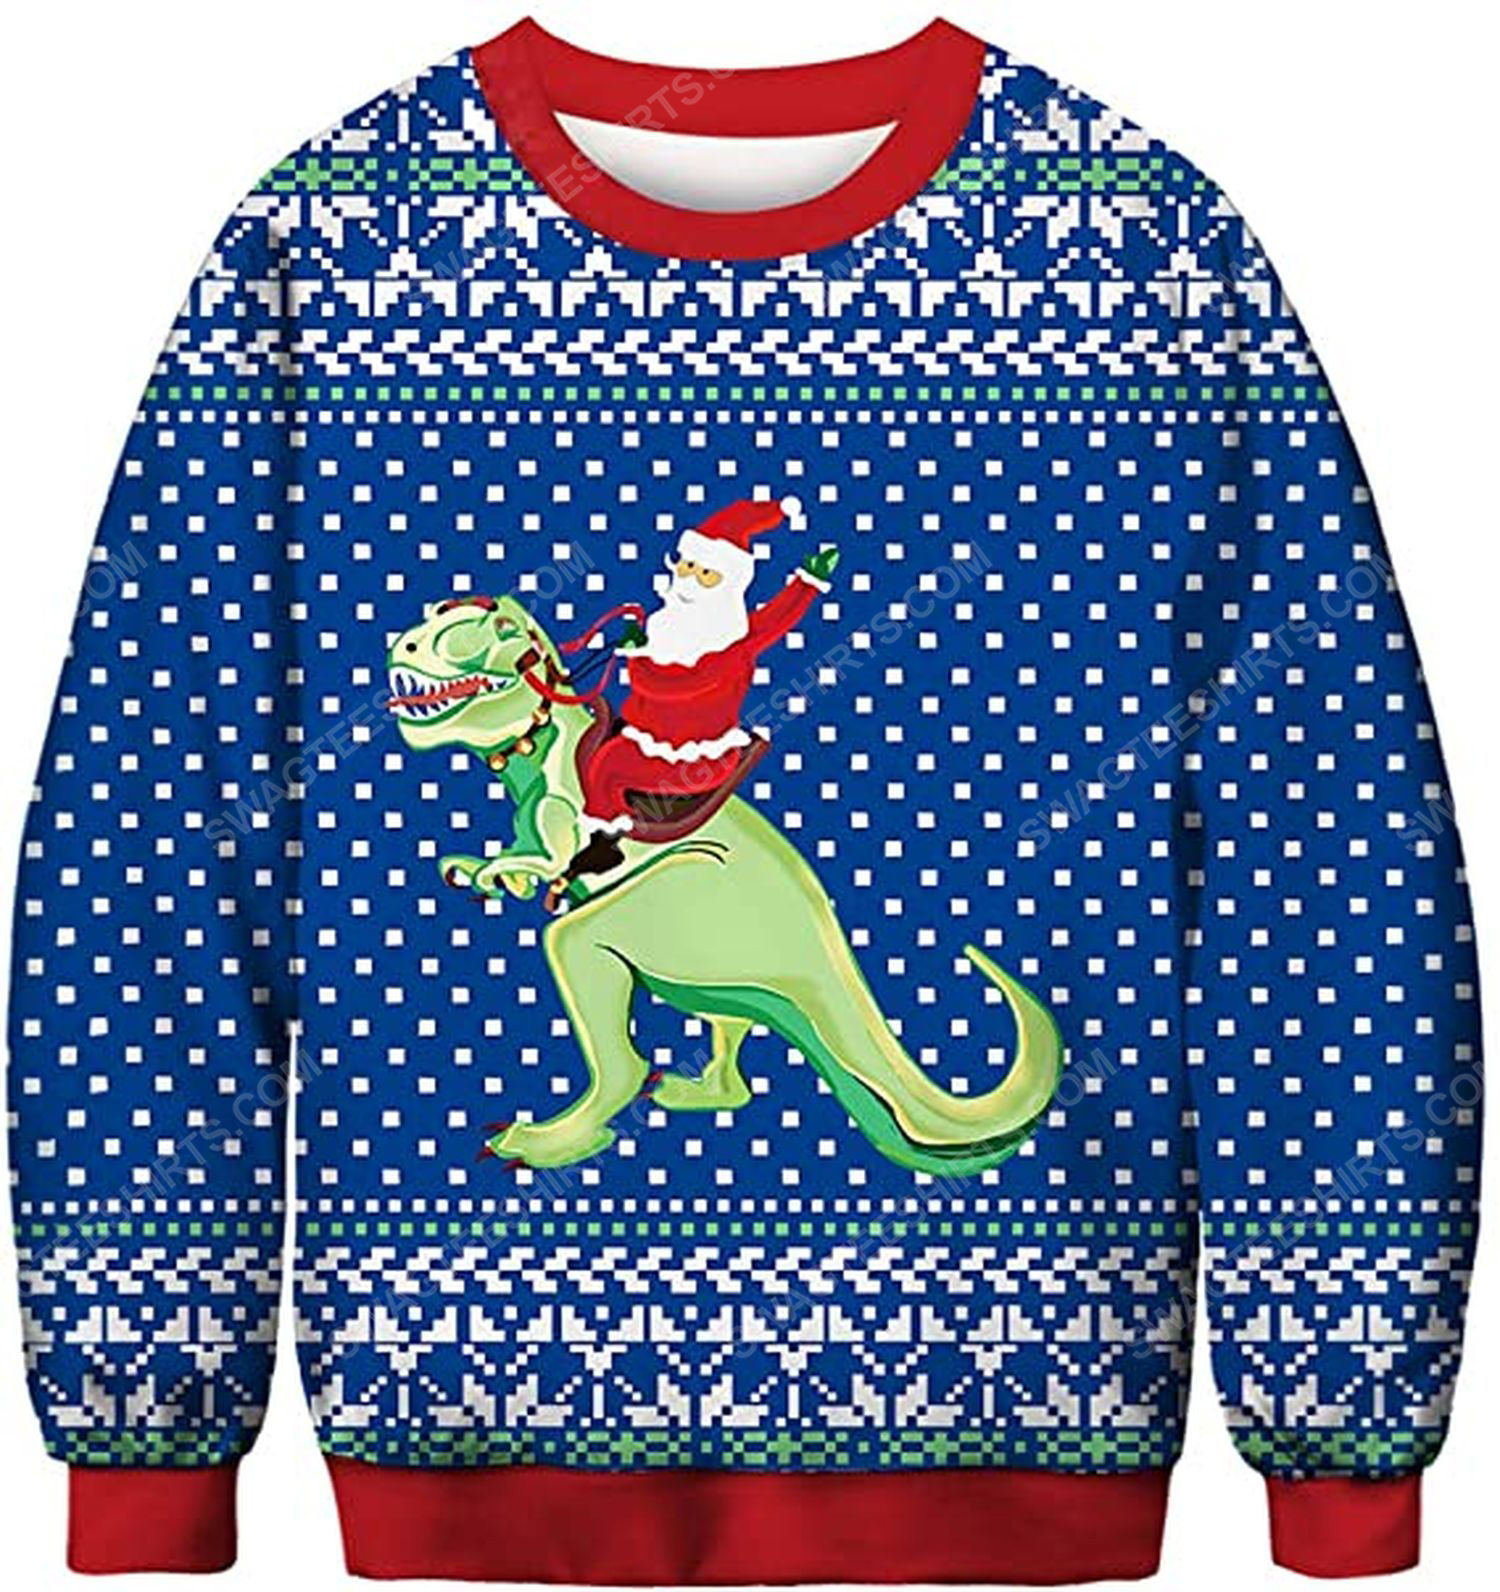 Santa claus riding a dinosaur full print ugly christmas sweater 1 - Copy (2)